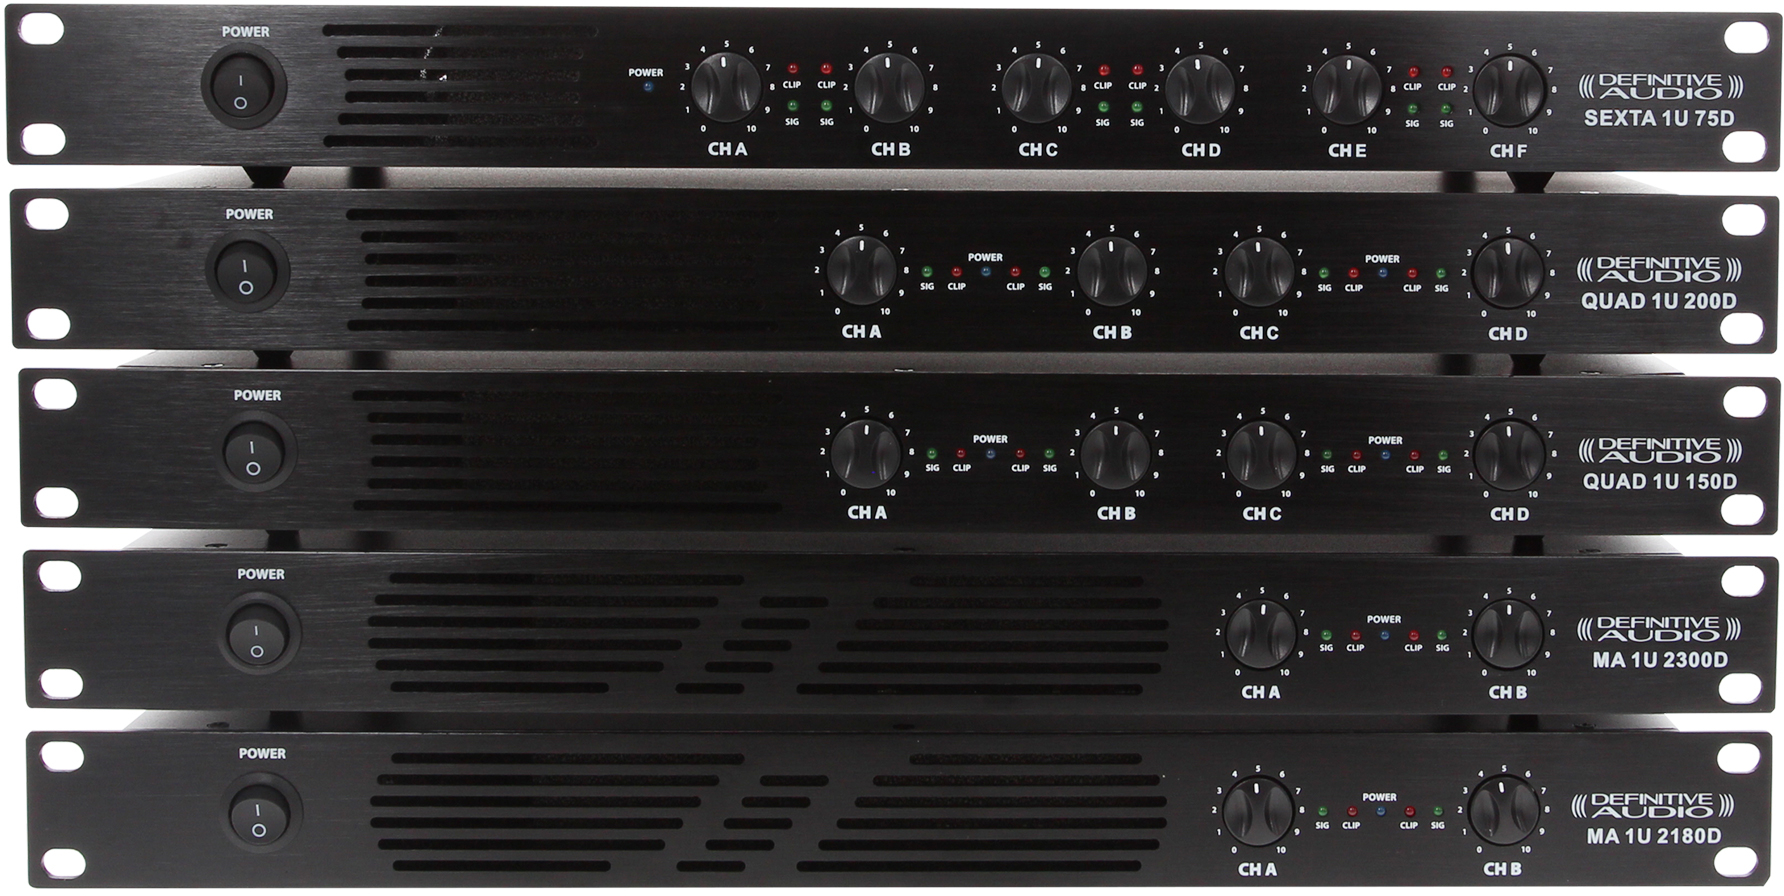 Definitive Audio Quad 1u 200d - Multi-kanalen krachtversterker - Variation 1